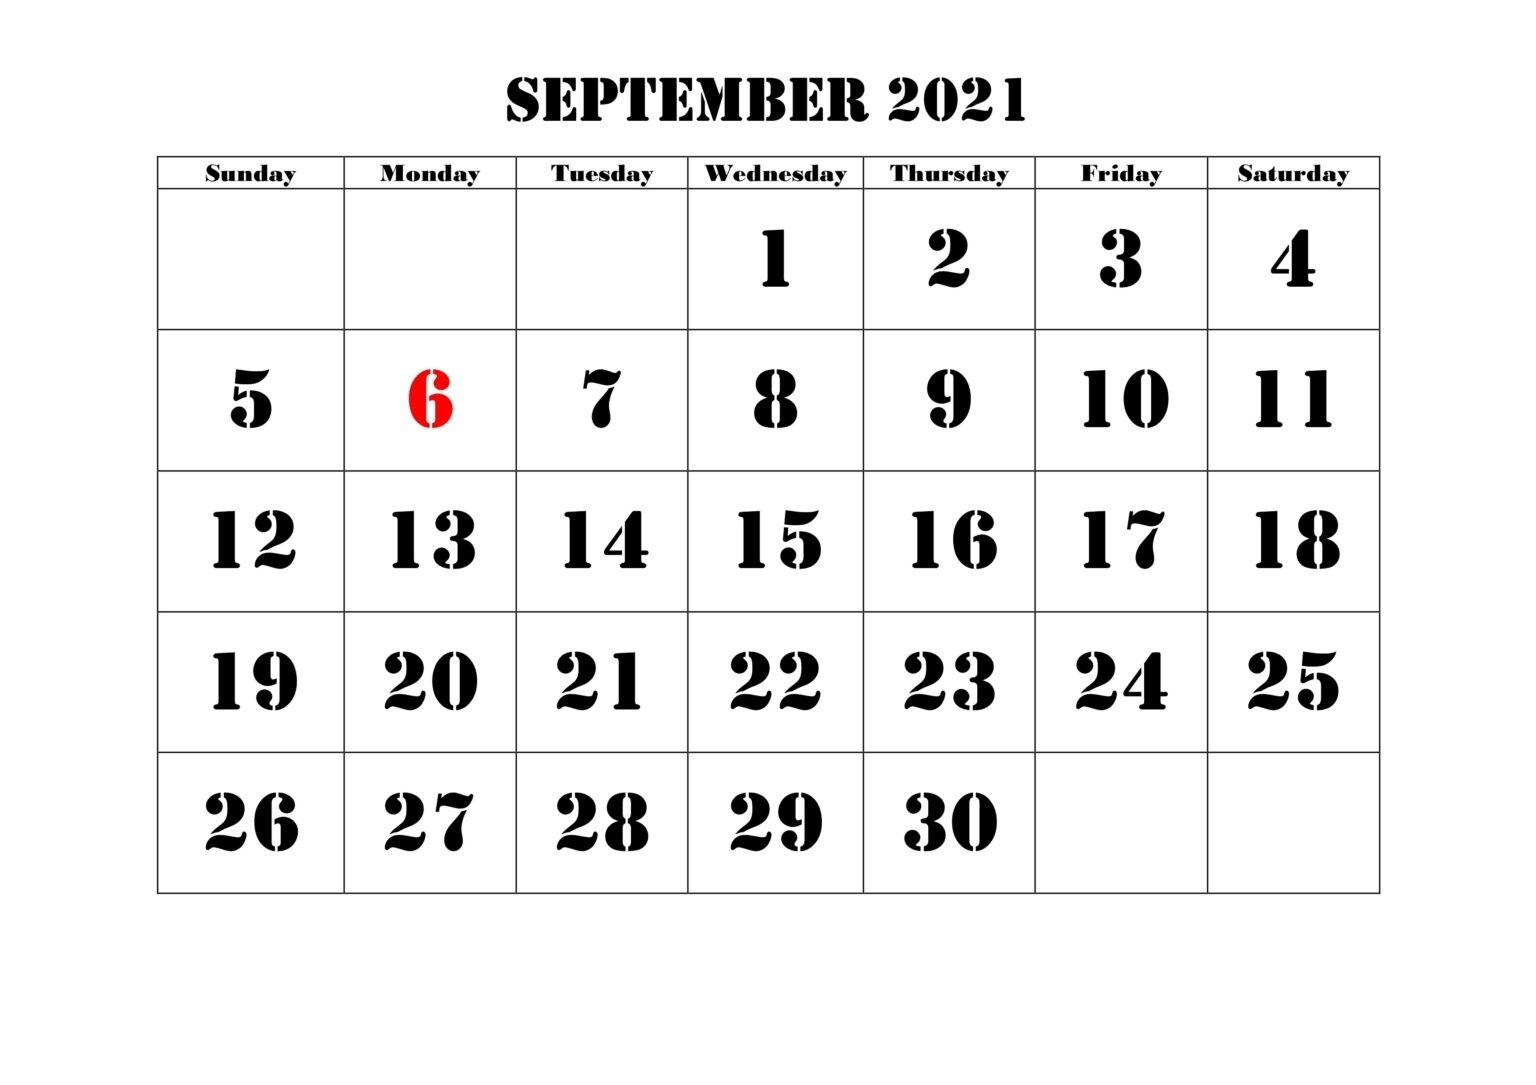 Free September 2021 Calendar Printable - Blank Templates September 2021 Calendar Free